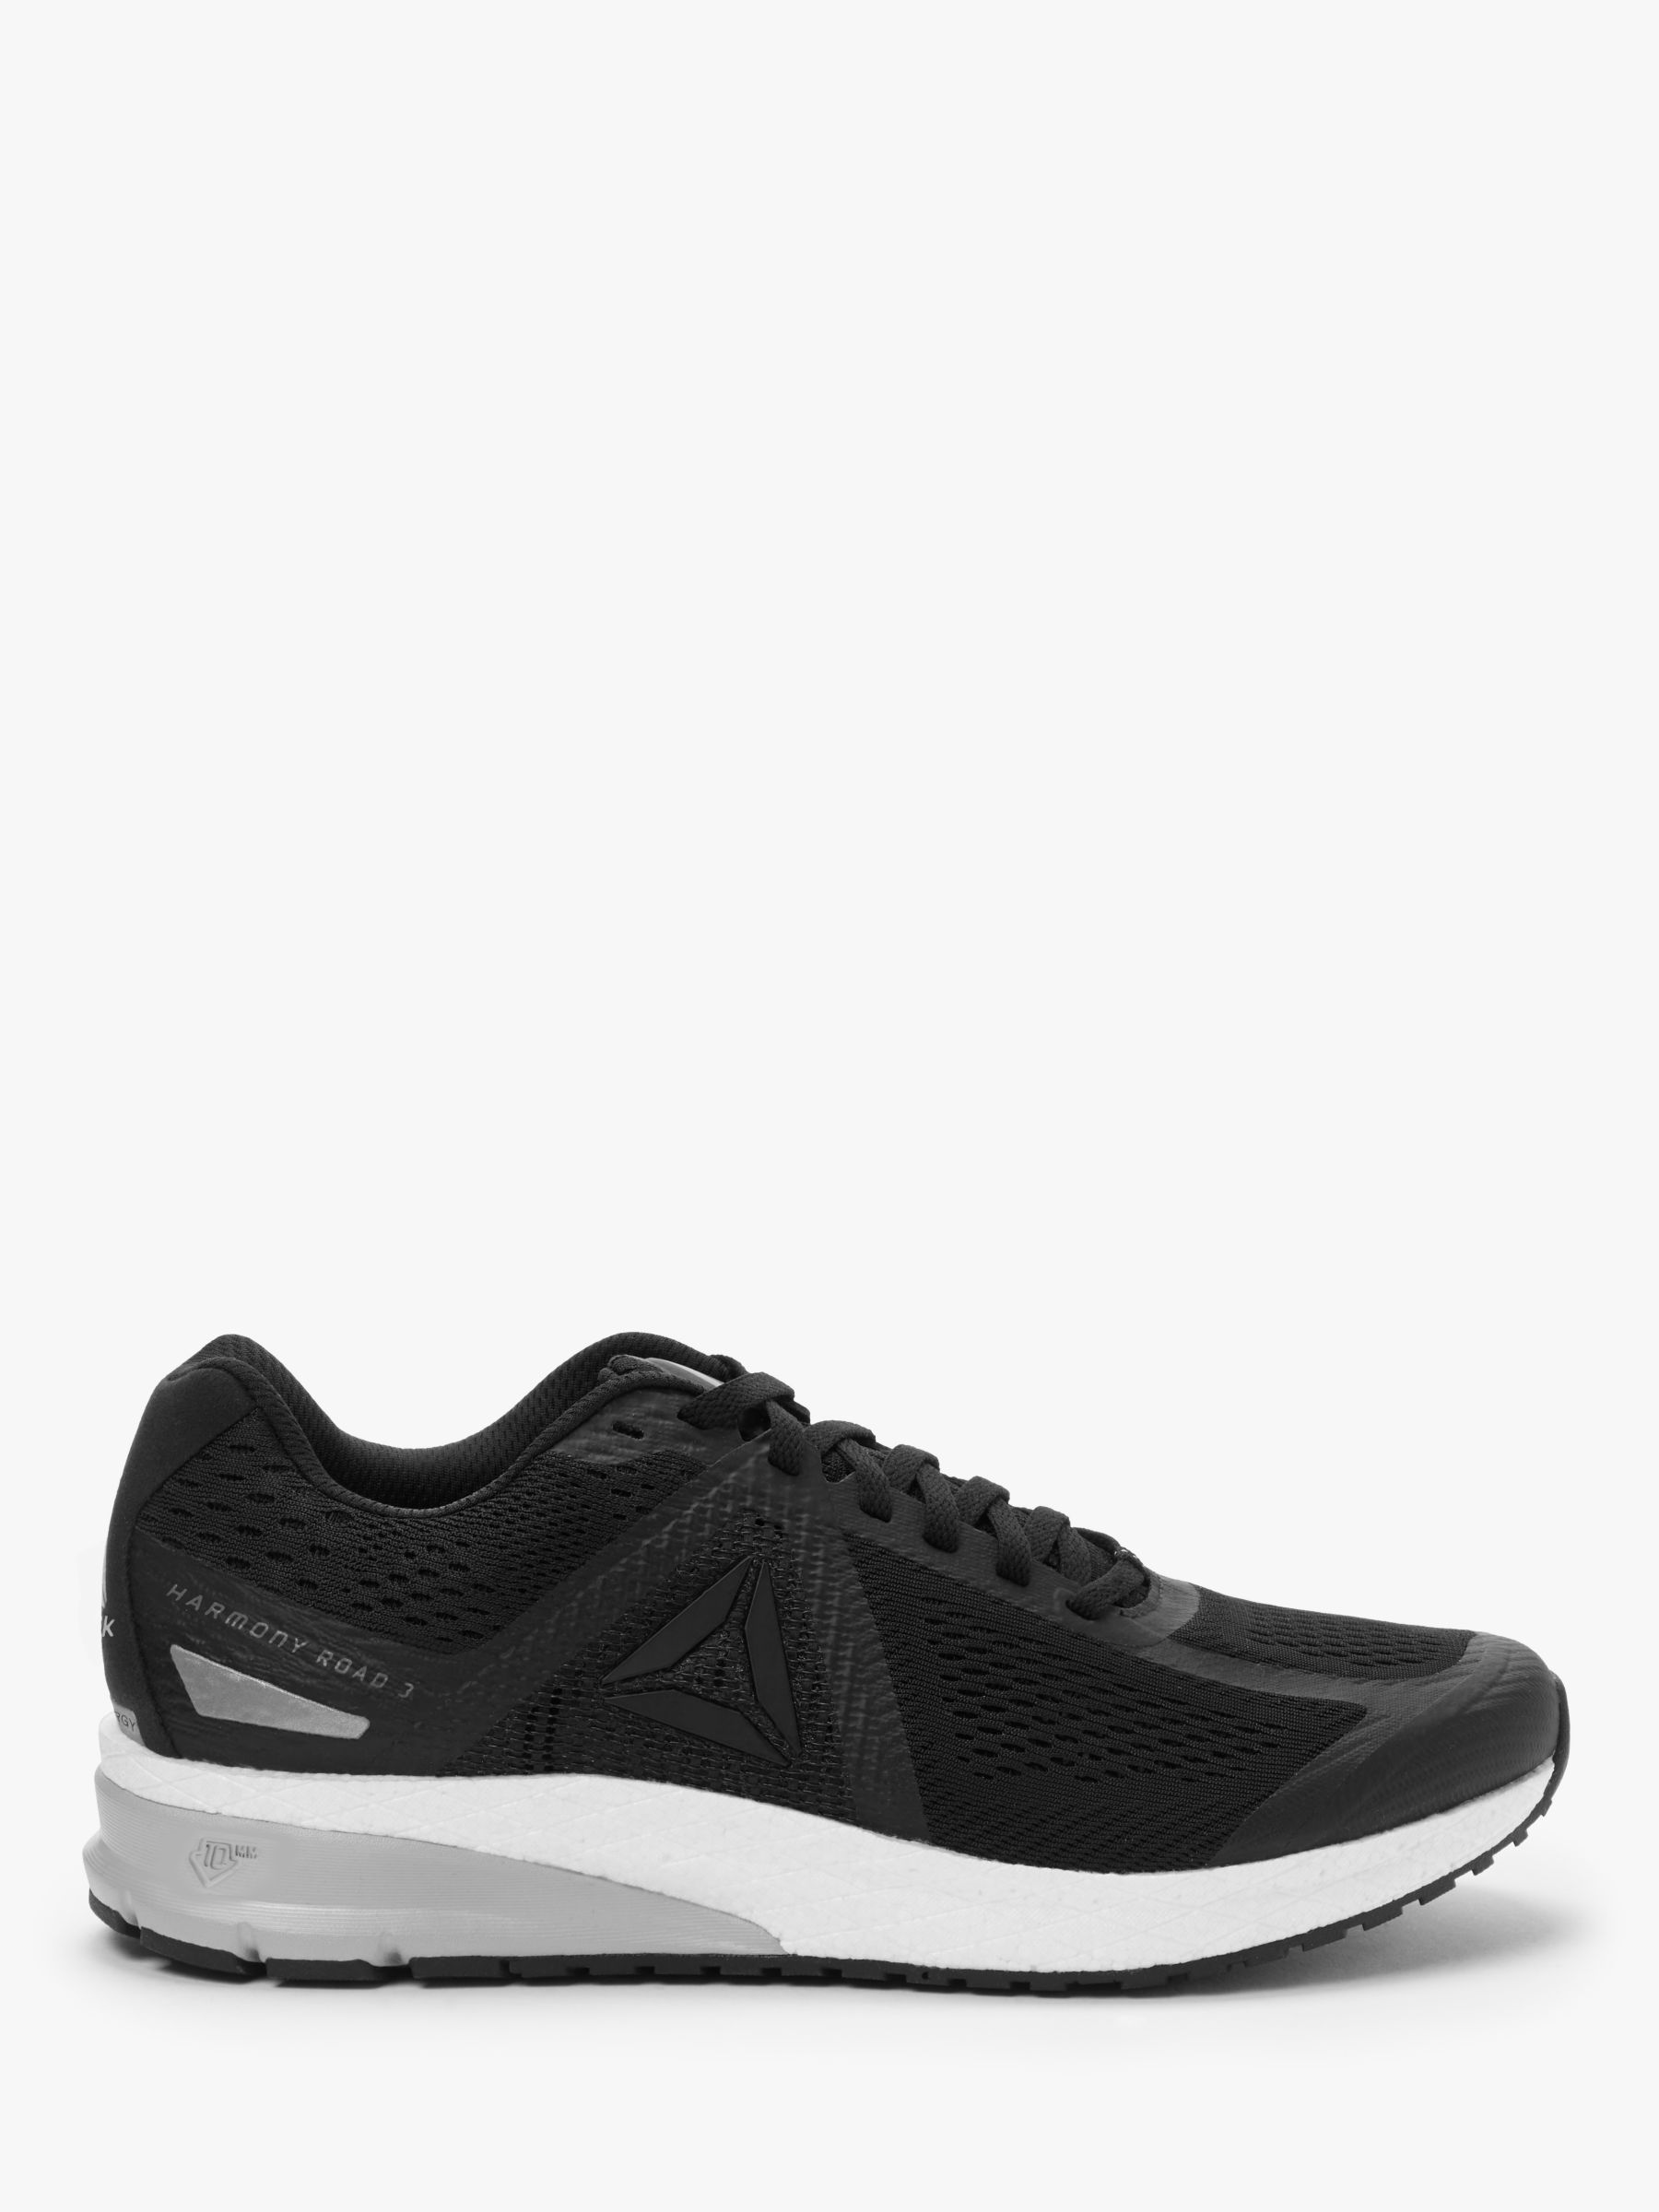 Reebok Harmony Road 3.0 Men's Running Shoes, Black/White/Cold Grey